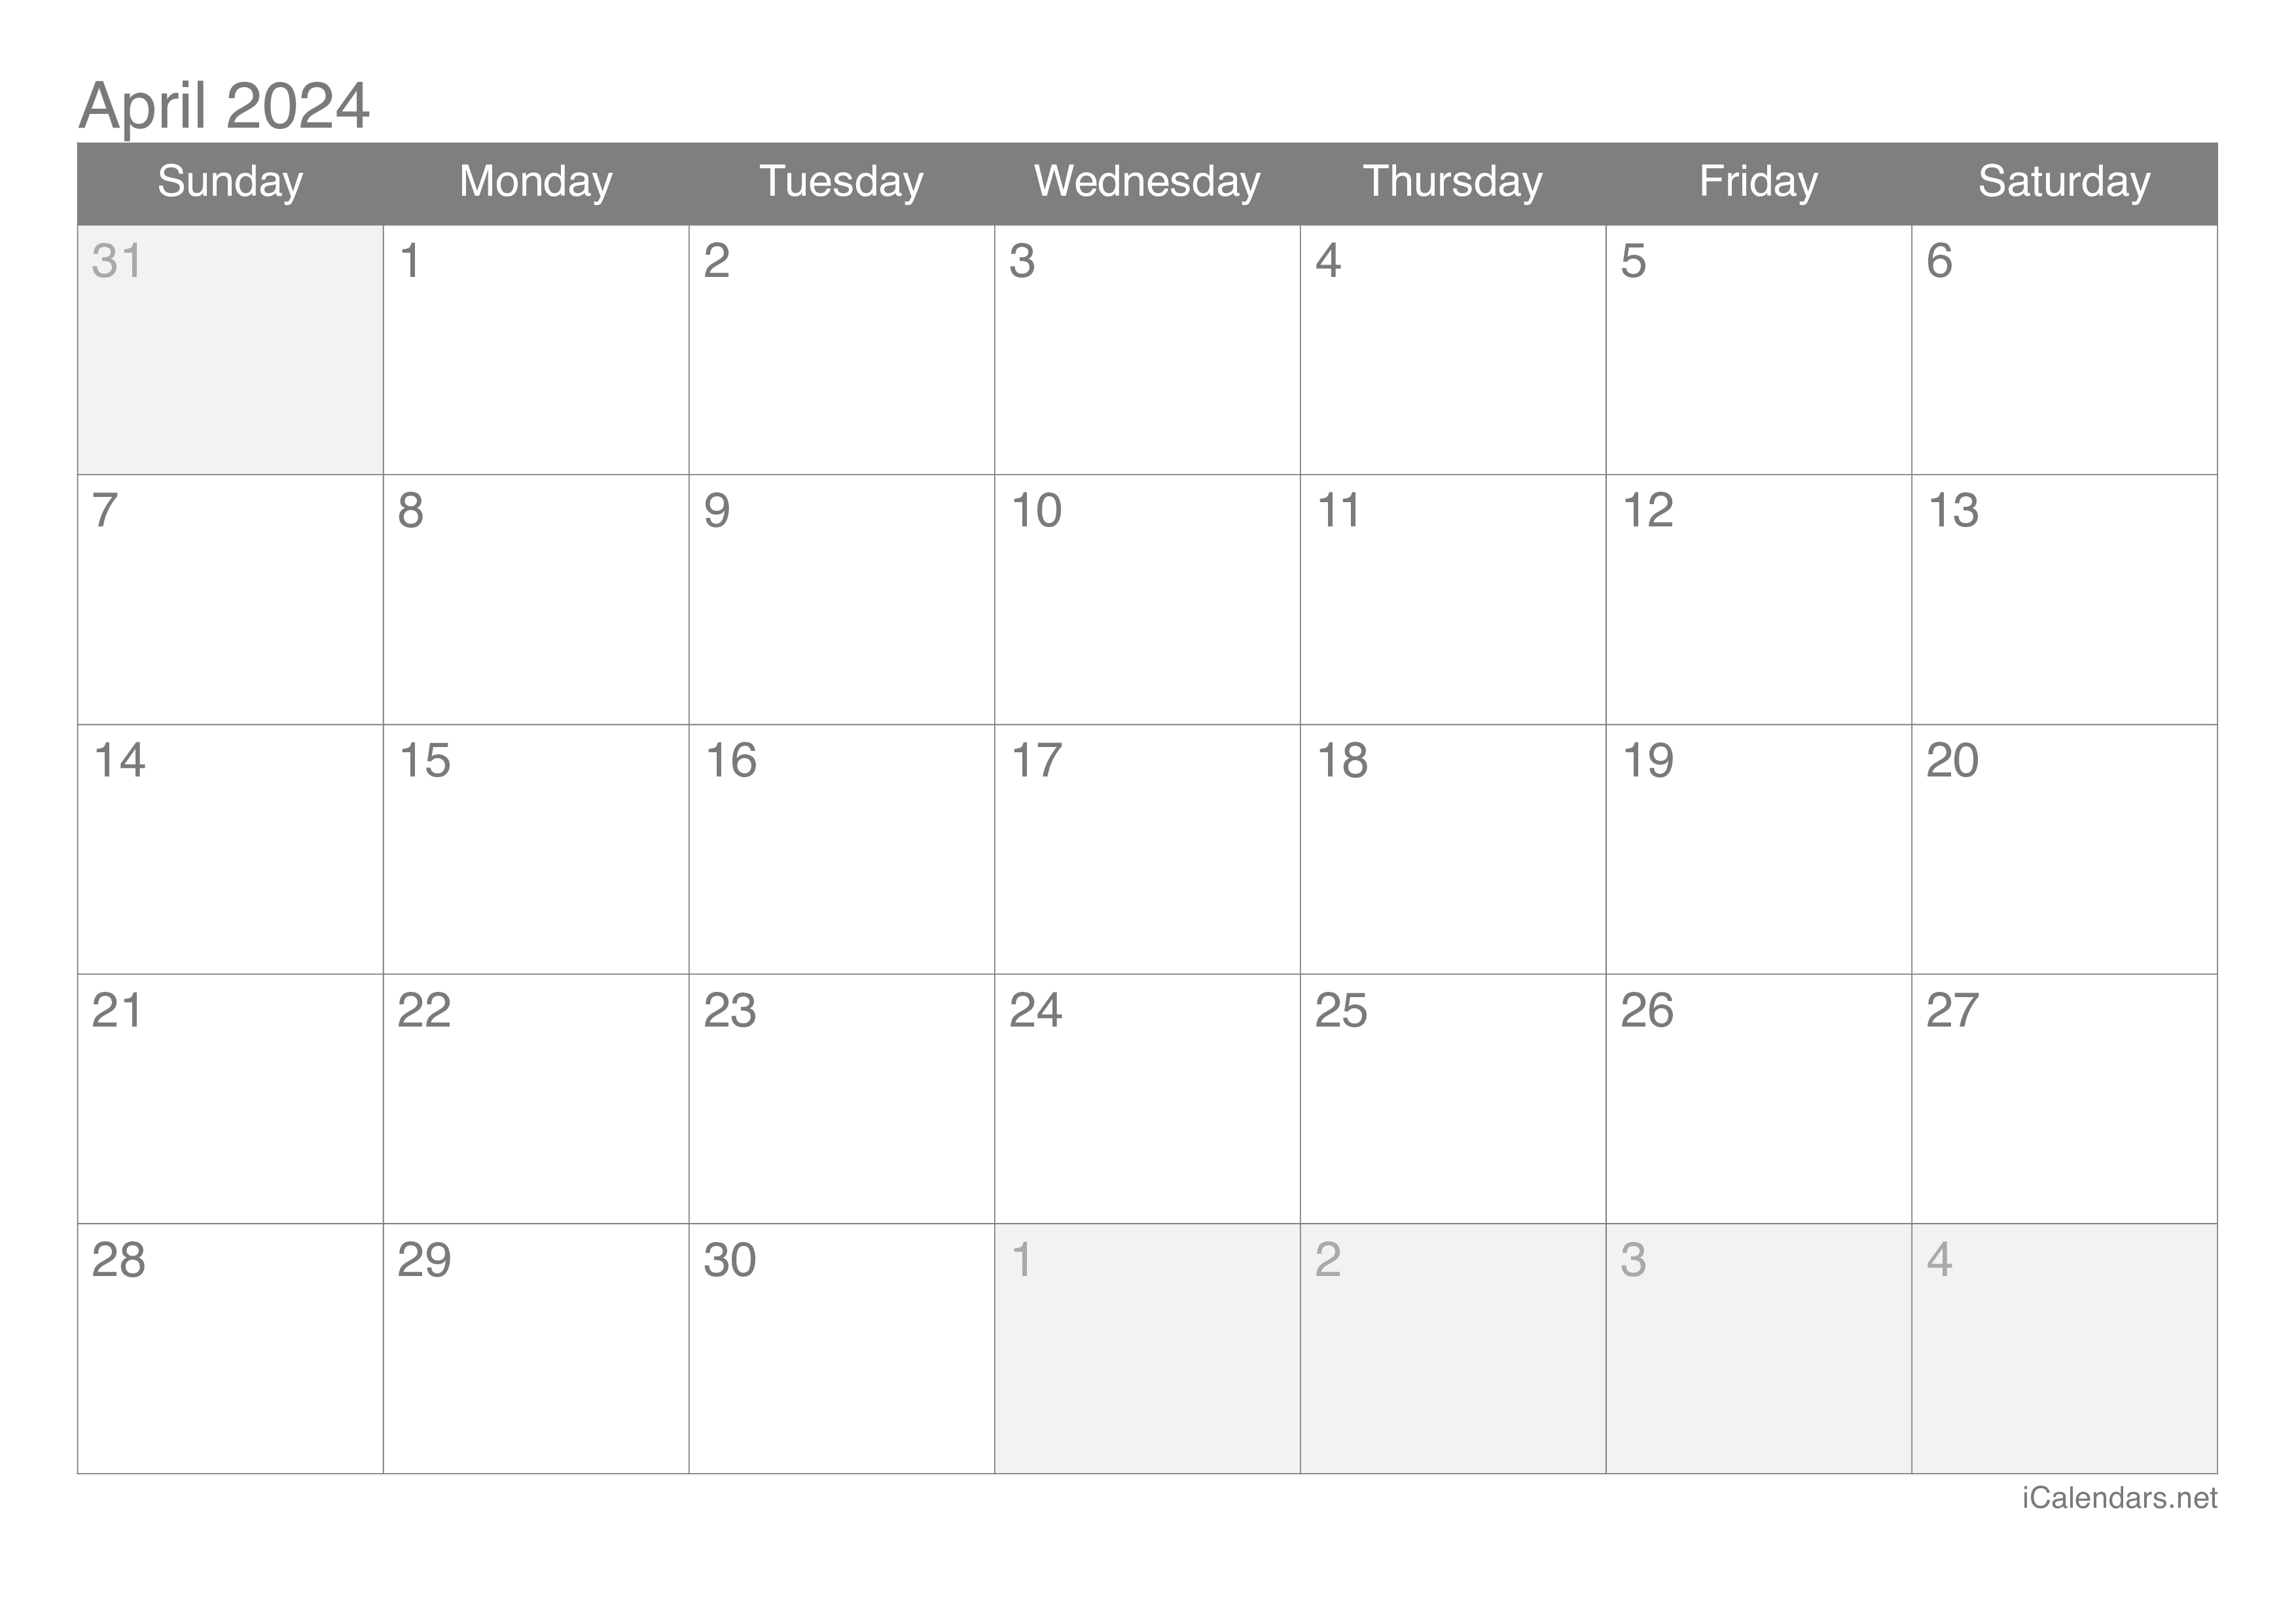 April 2024 Printable Calendar icalendars net